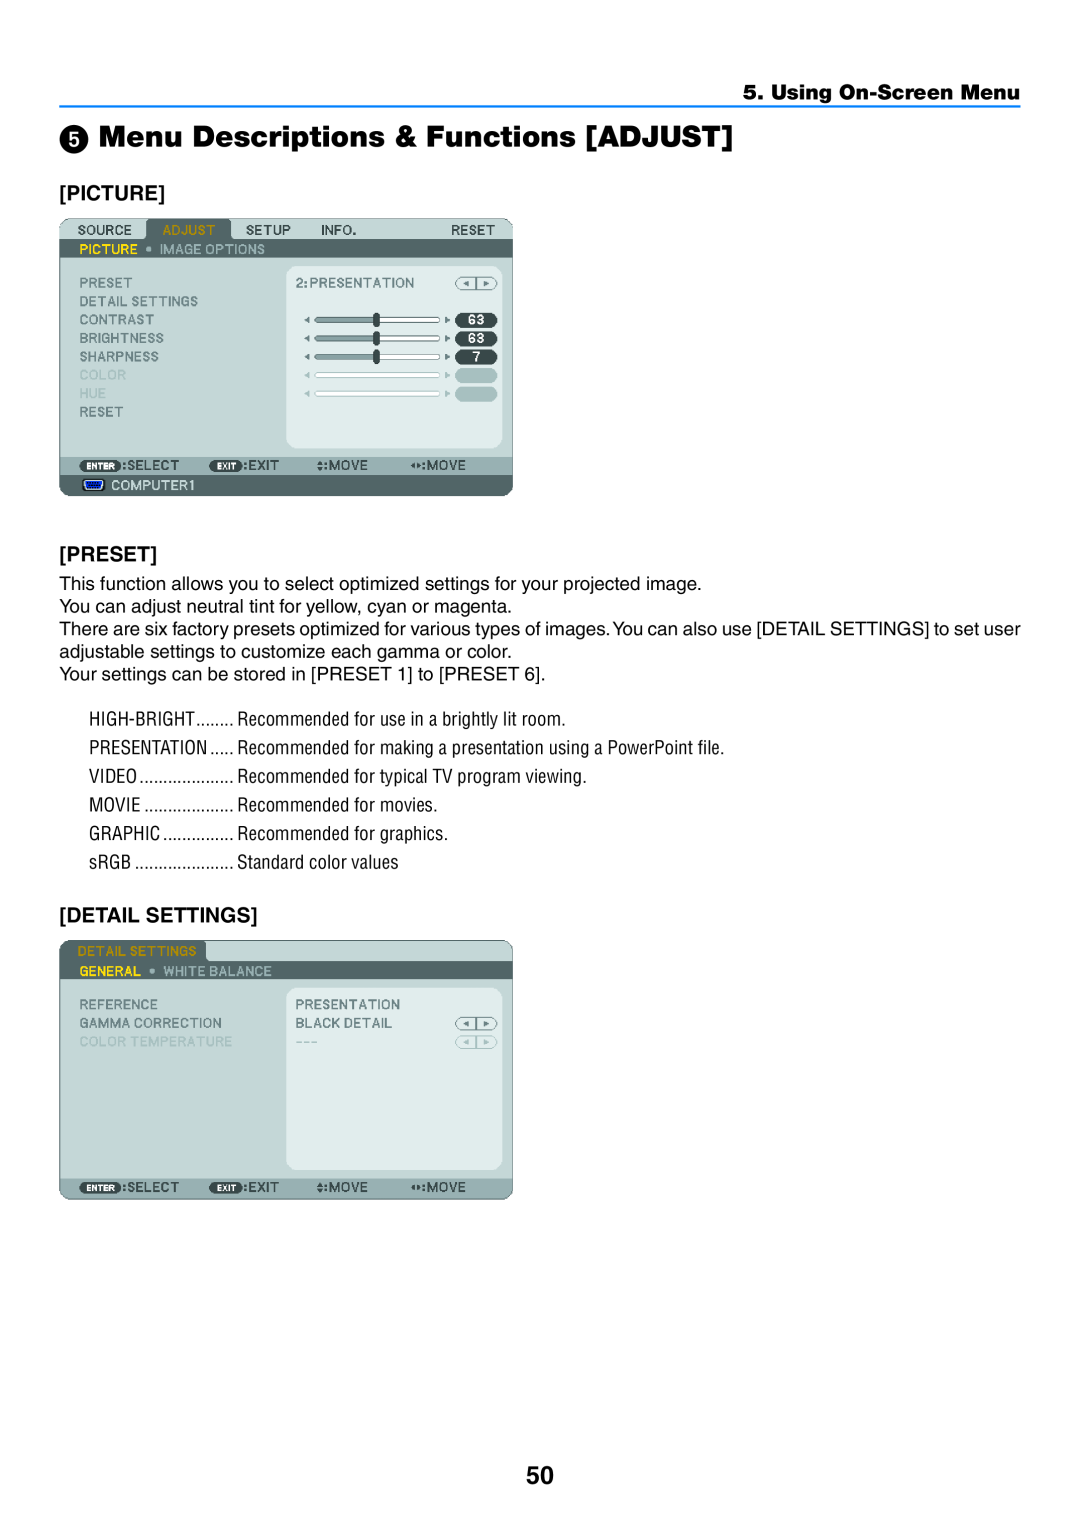 NEC NP400, NP600G, NP500WG Menu Descriptions & Functions ADJUST, Picture Preset, Detail Settings, Using On-Screen Menu 